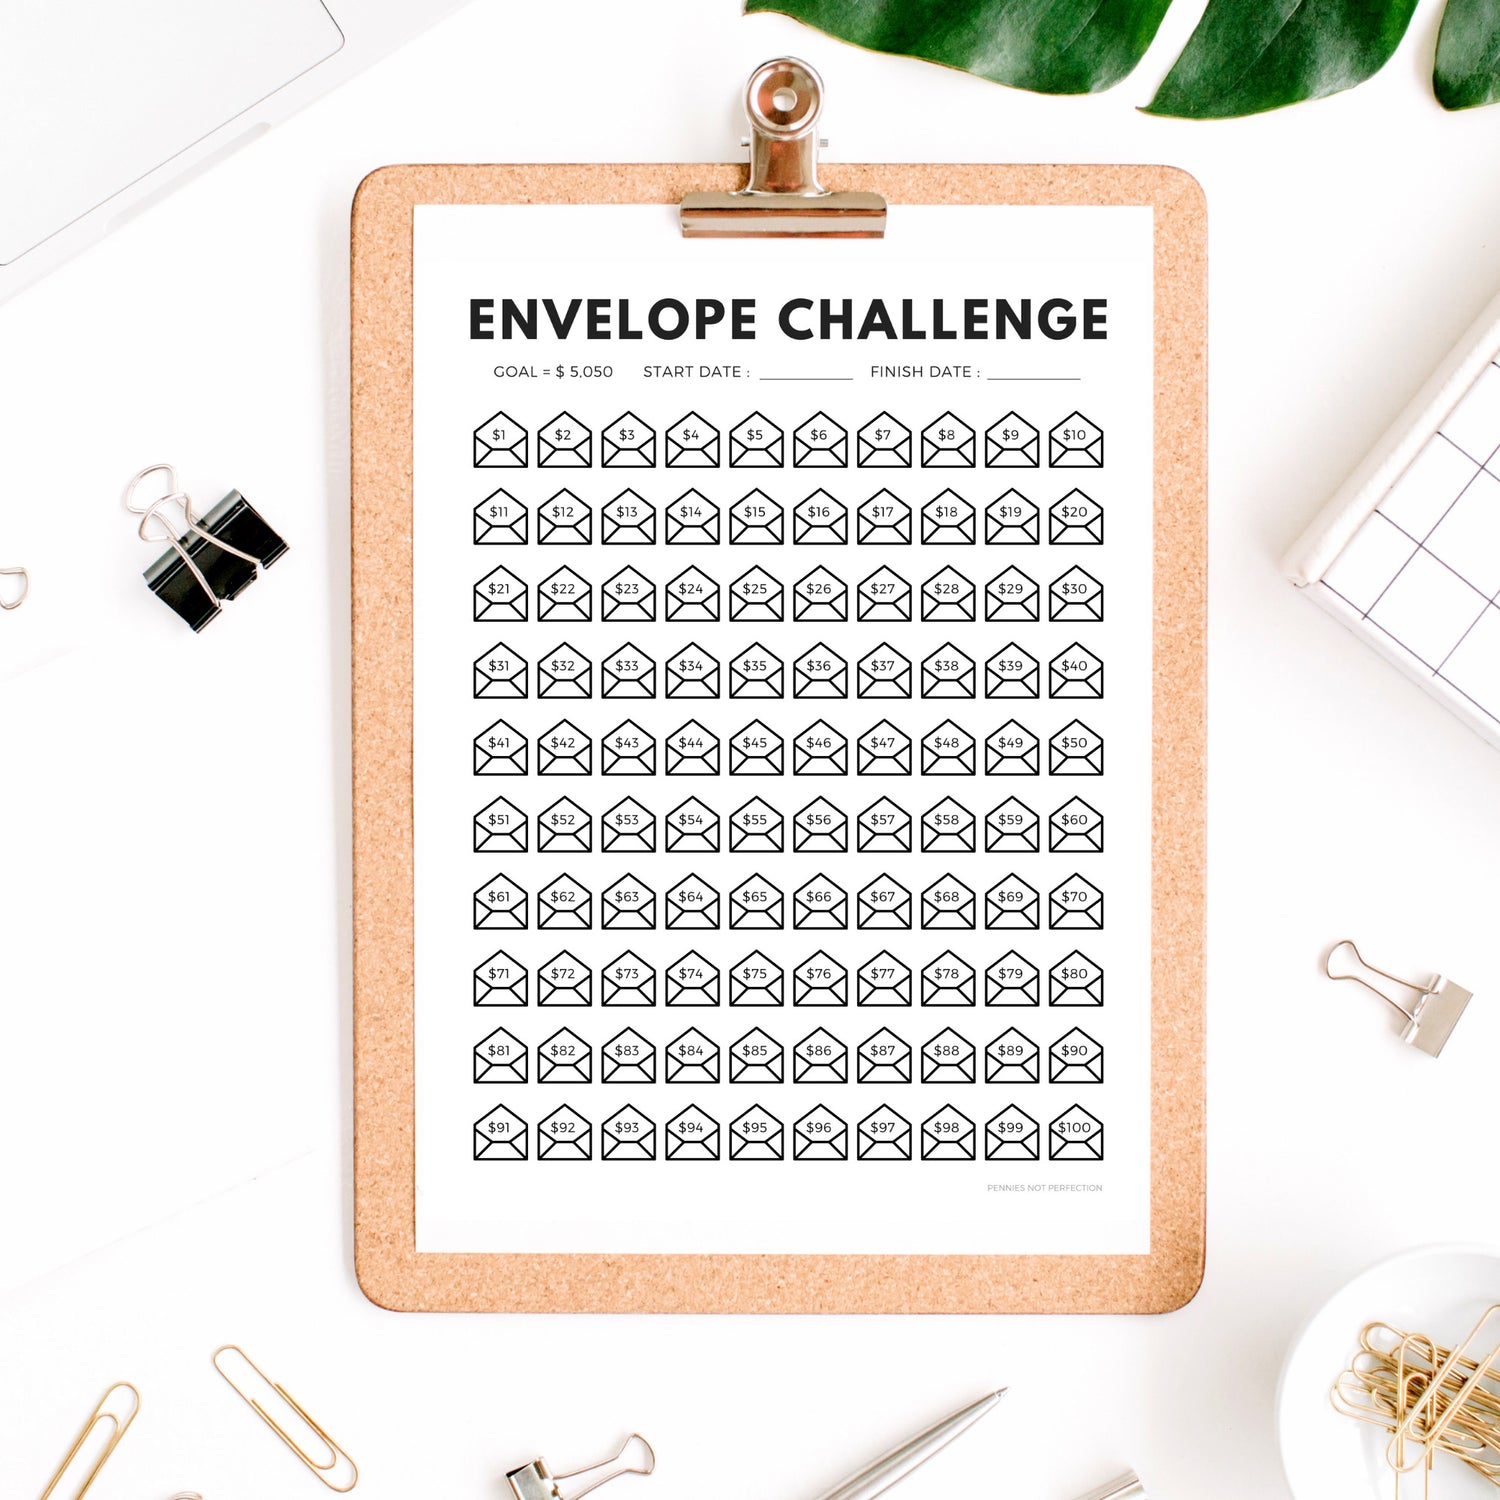 100 envelope challenge kit